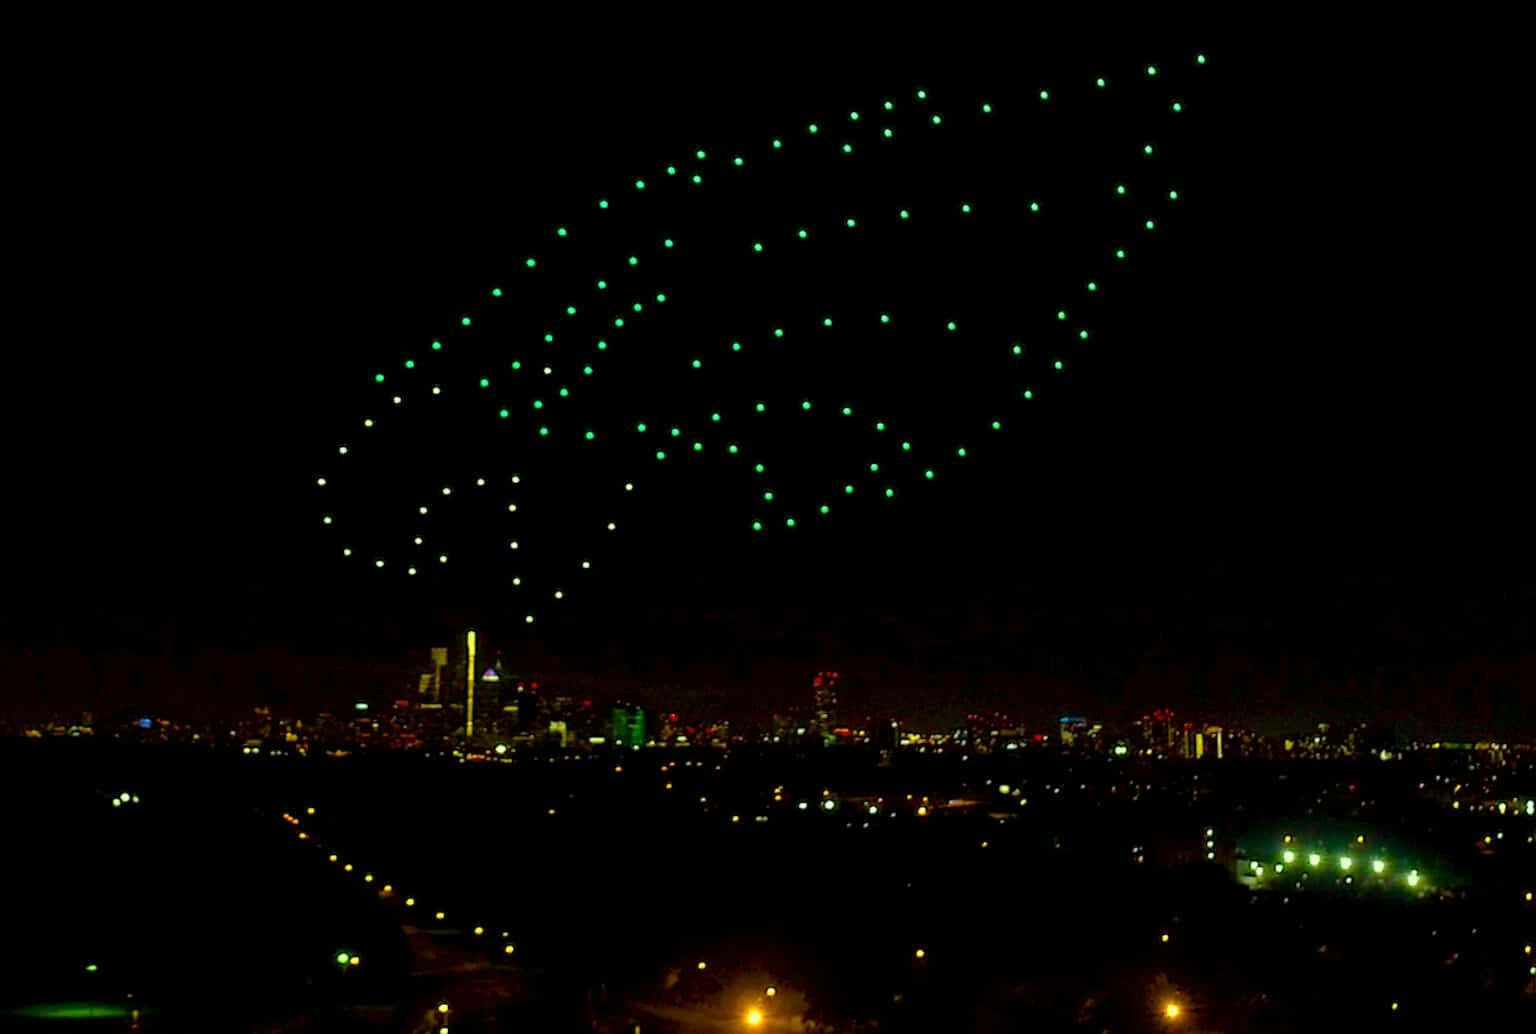 Verge Aero flys the Philadelphia Eagles logo with 200 drones